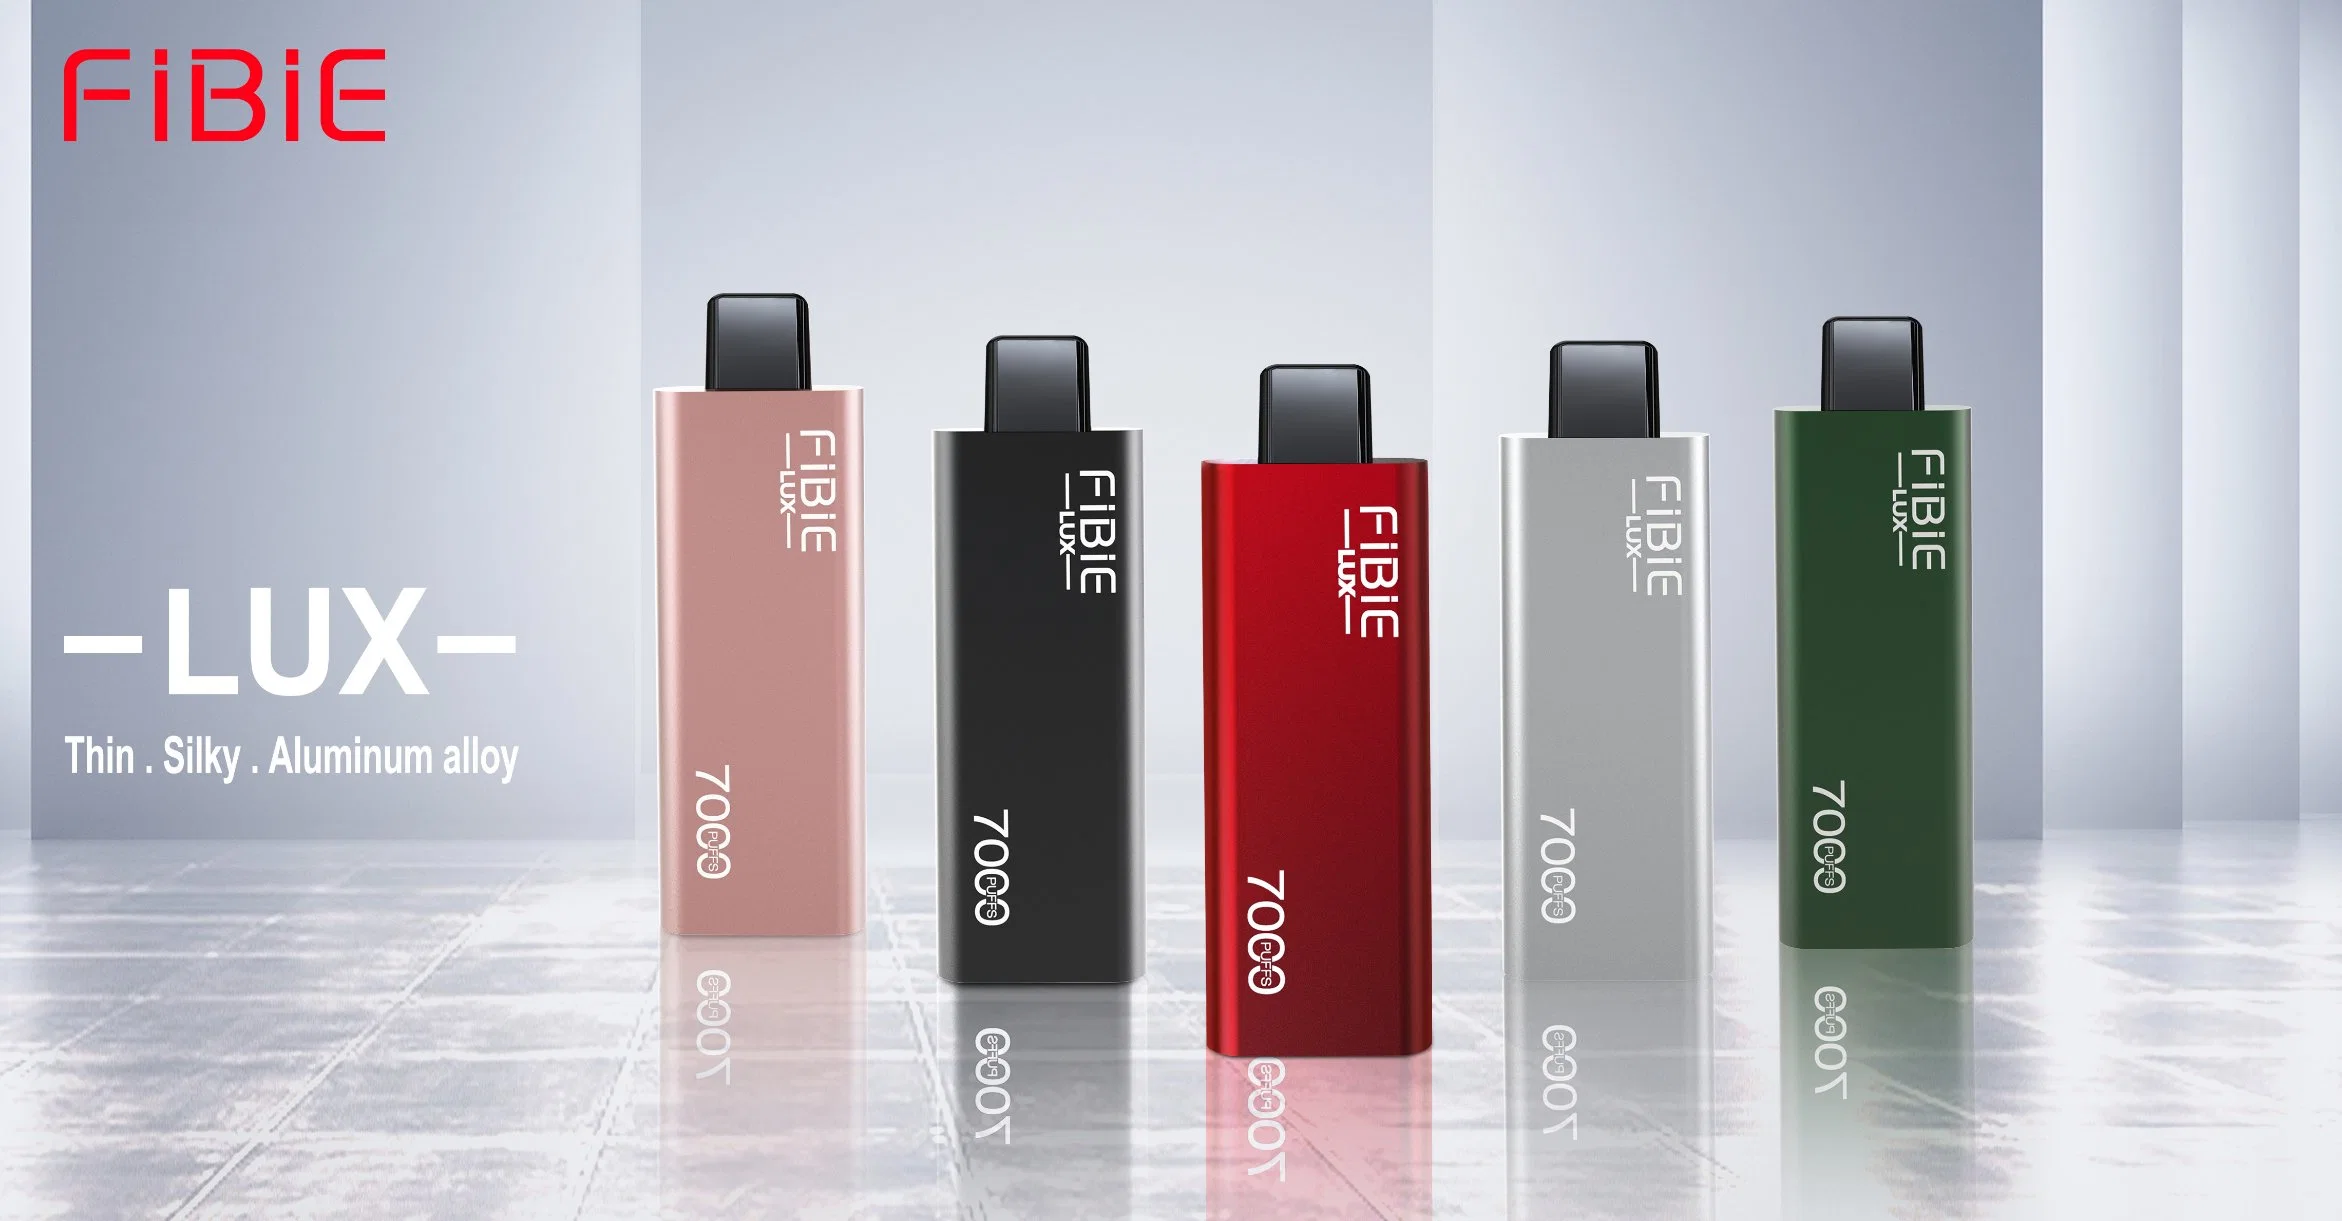 10 Regular Flavors Original Fibie 7000 Puffs Disposable/Chargeable Vape Pen 2% & 5% Tank Design 650mAh Type-C Rechargeable Disposable/Chargeable Mini vape